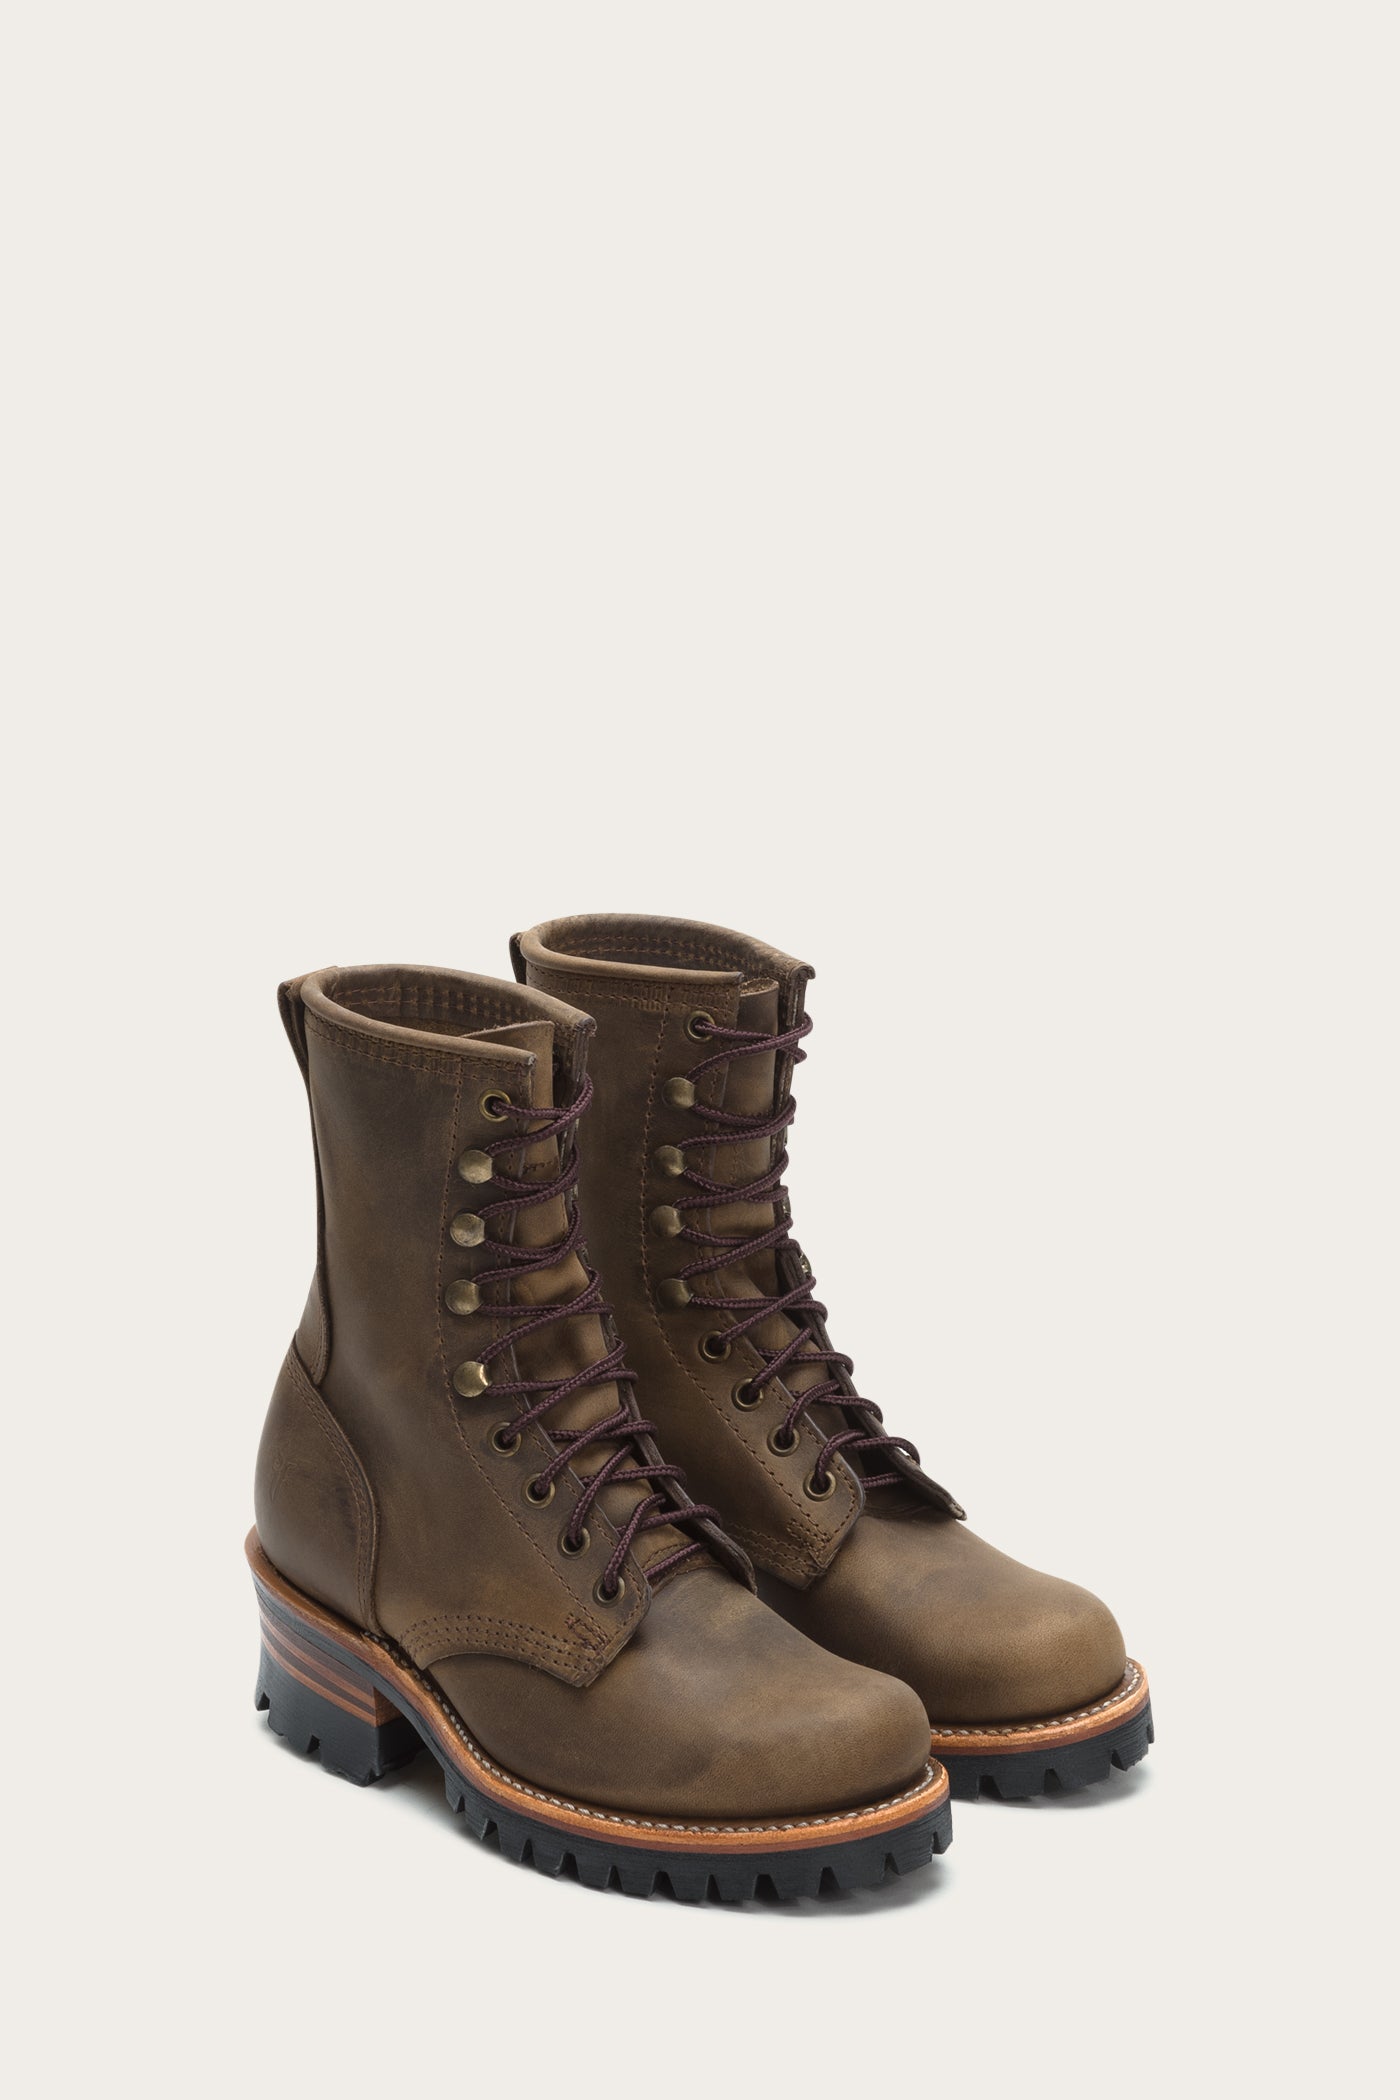 frye logger boots